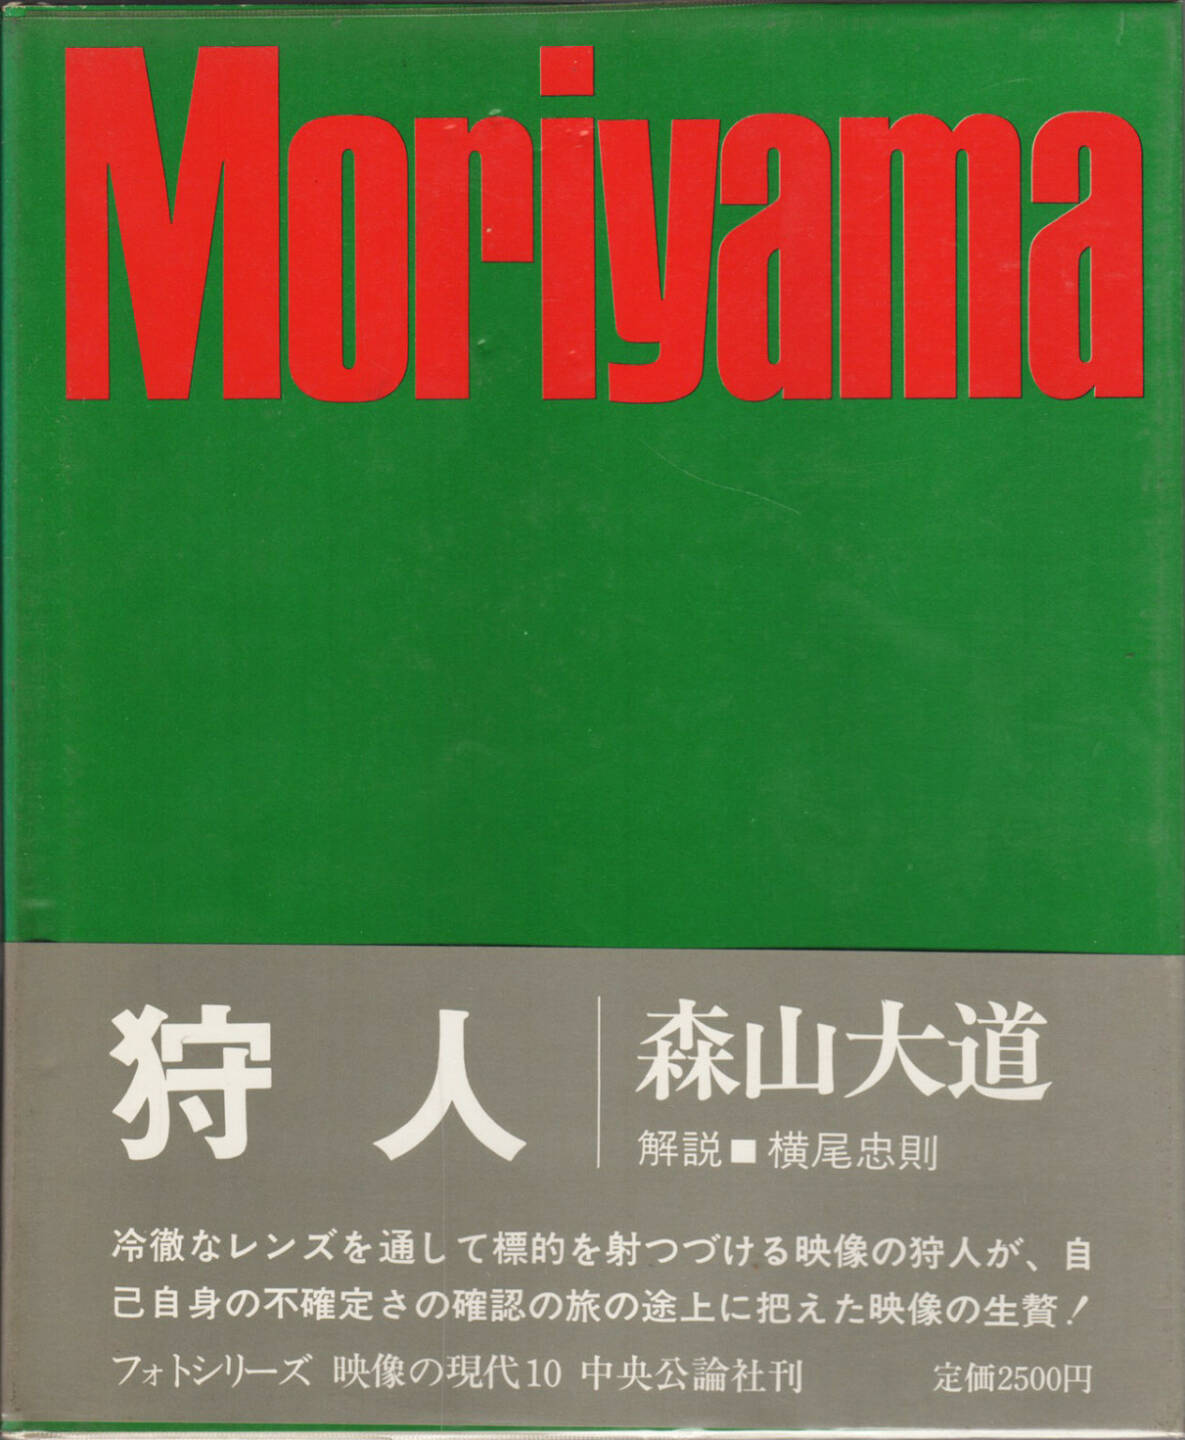 Daido Moriyama - A Hunter (森山大道 狩人 映像の現代10) (1972) - 1500-2800 Euro, http://josefchladek.com/book/daido_moriyama_-_a_hunter_森山大道_狩人_映像の現代10